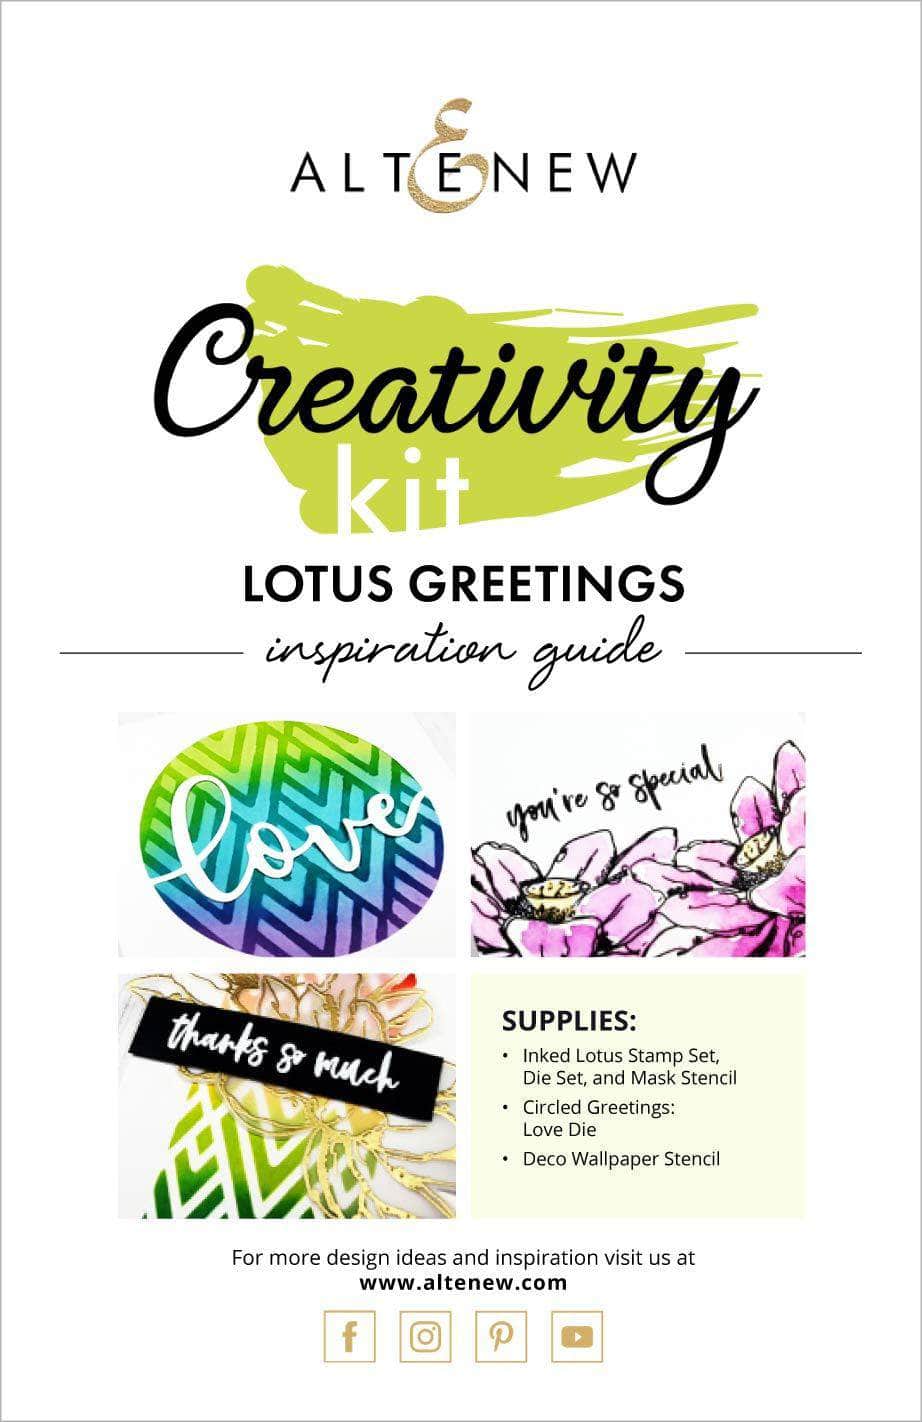 Printed Media Lotus Greetings Creativity Kit Inspiration Guide